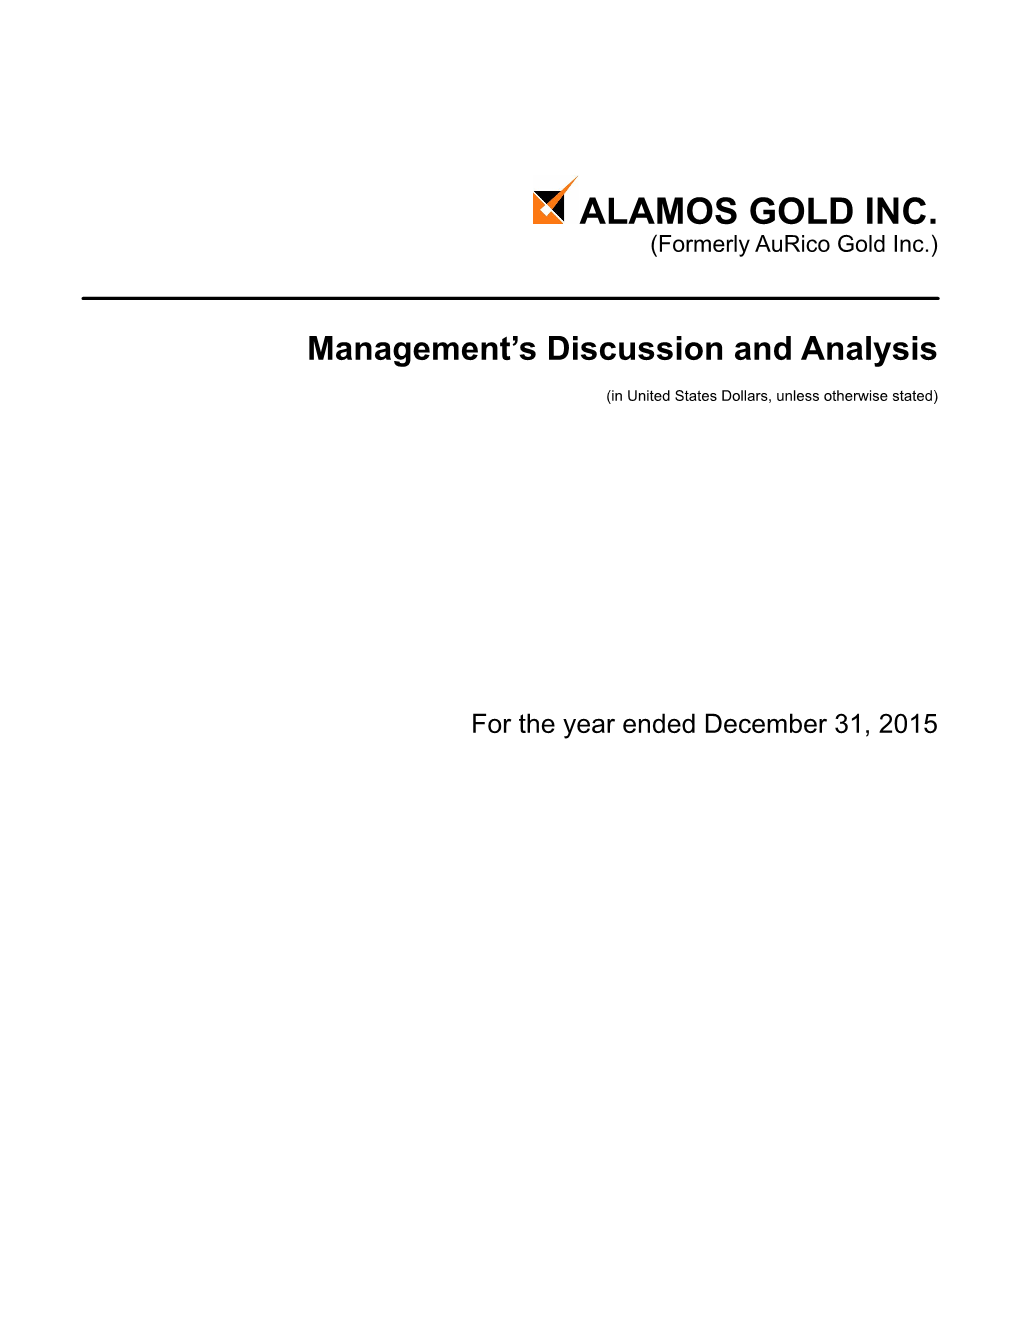 ALAMOS GOLD INC. (Formerly Aurico Gold Inc.)